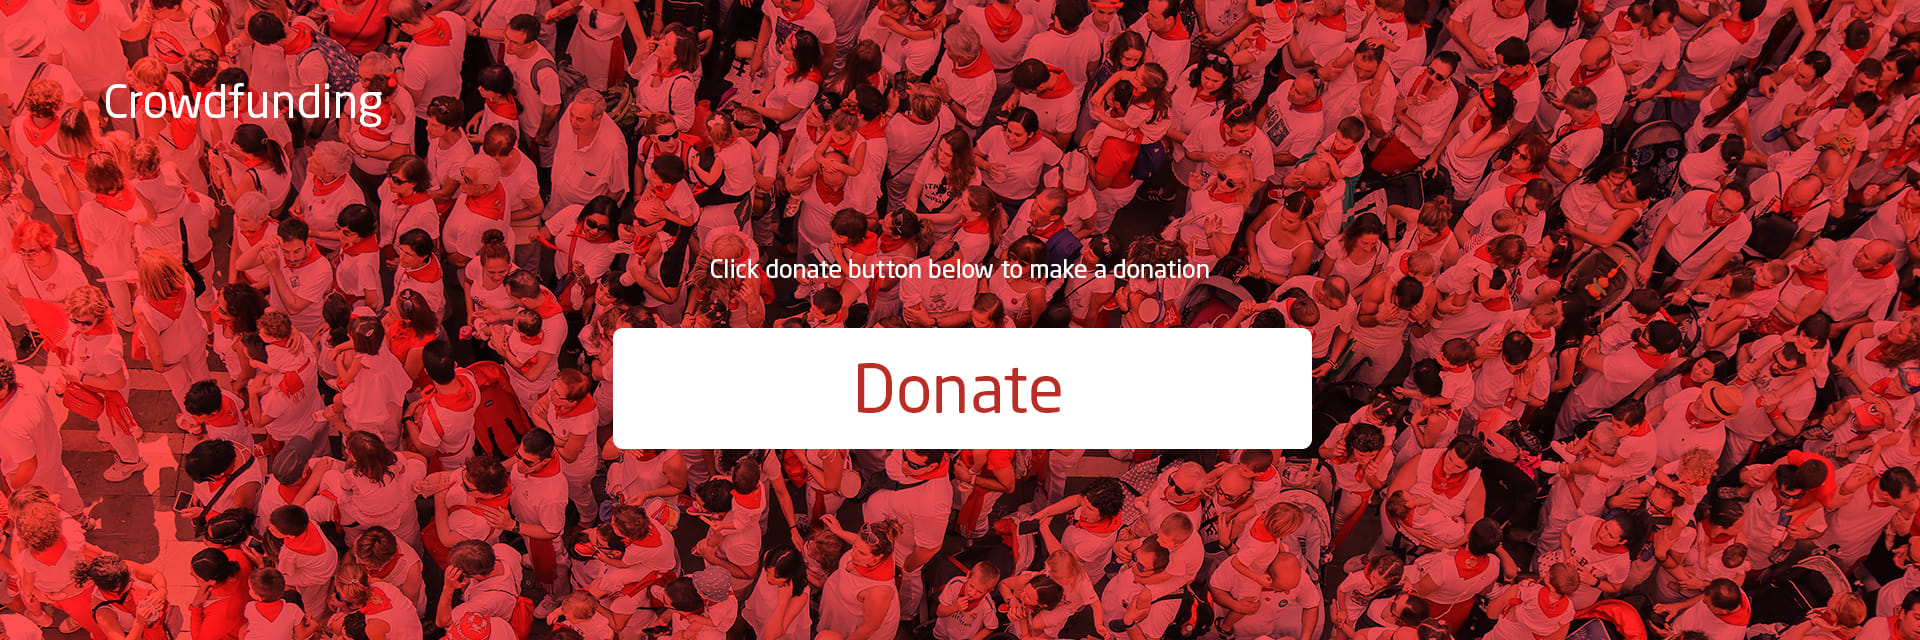 Charity crowdfunding web platform